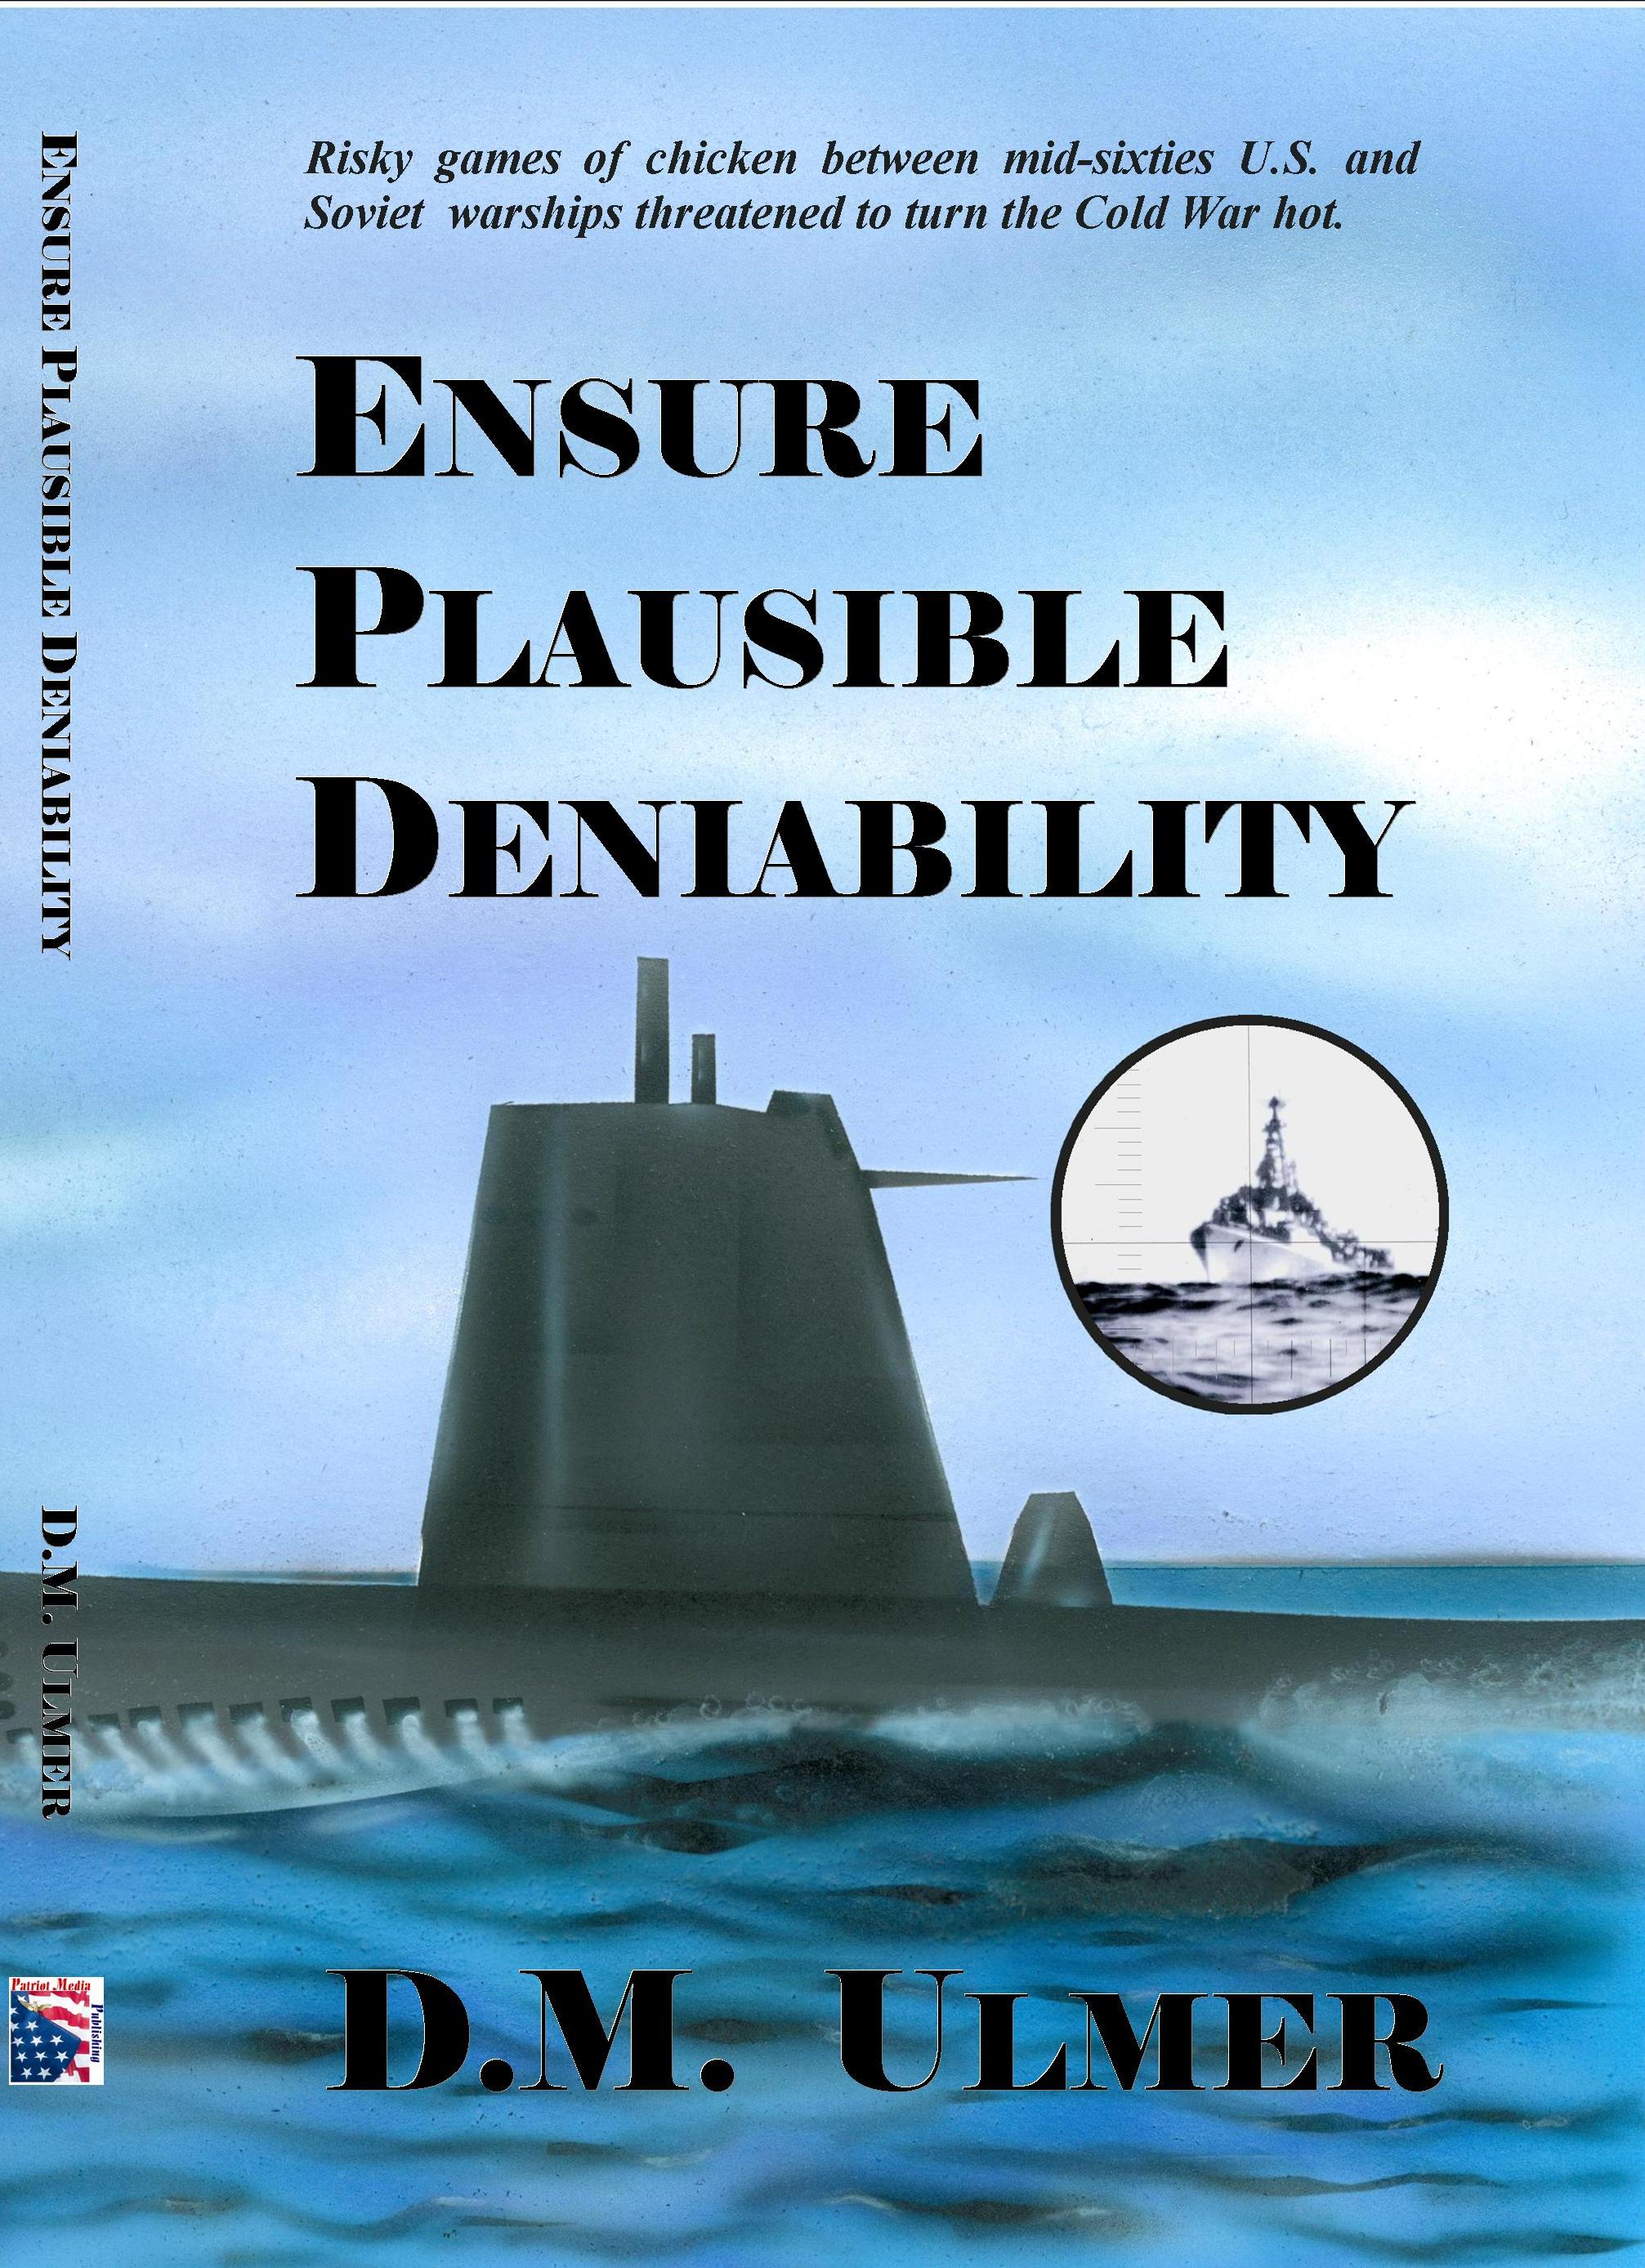 Ensure Plausible Deniability by D.M. Ulmer